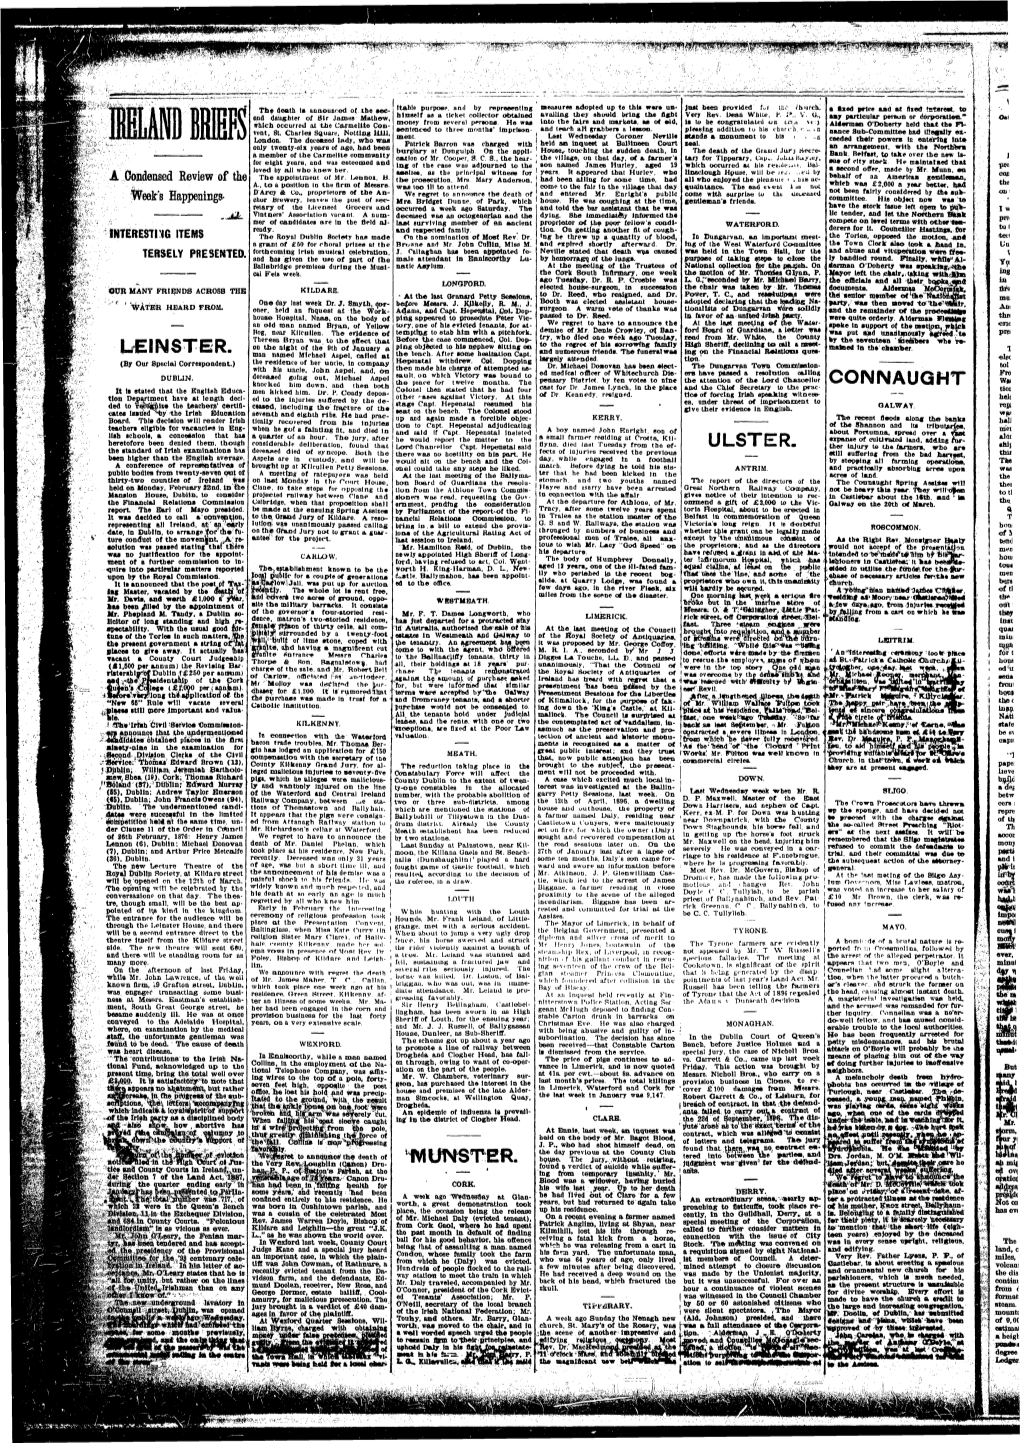 Catholic-Journal-1896-October-1897-December